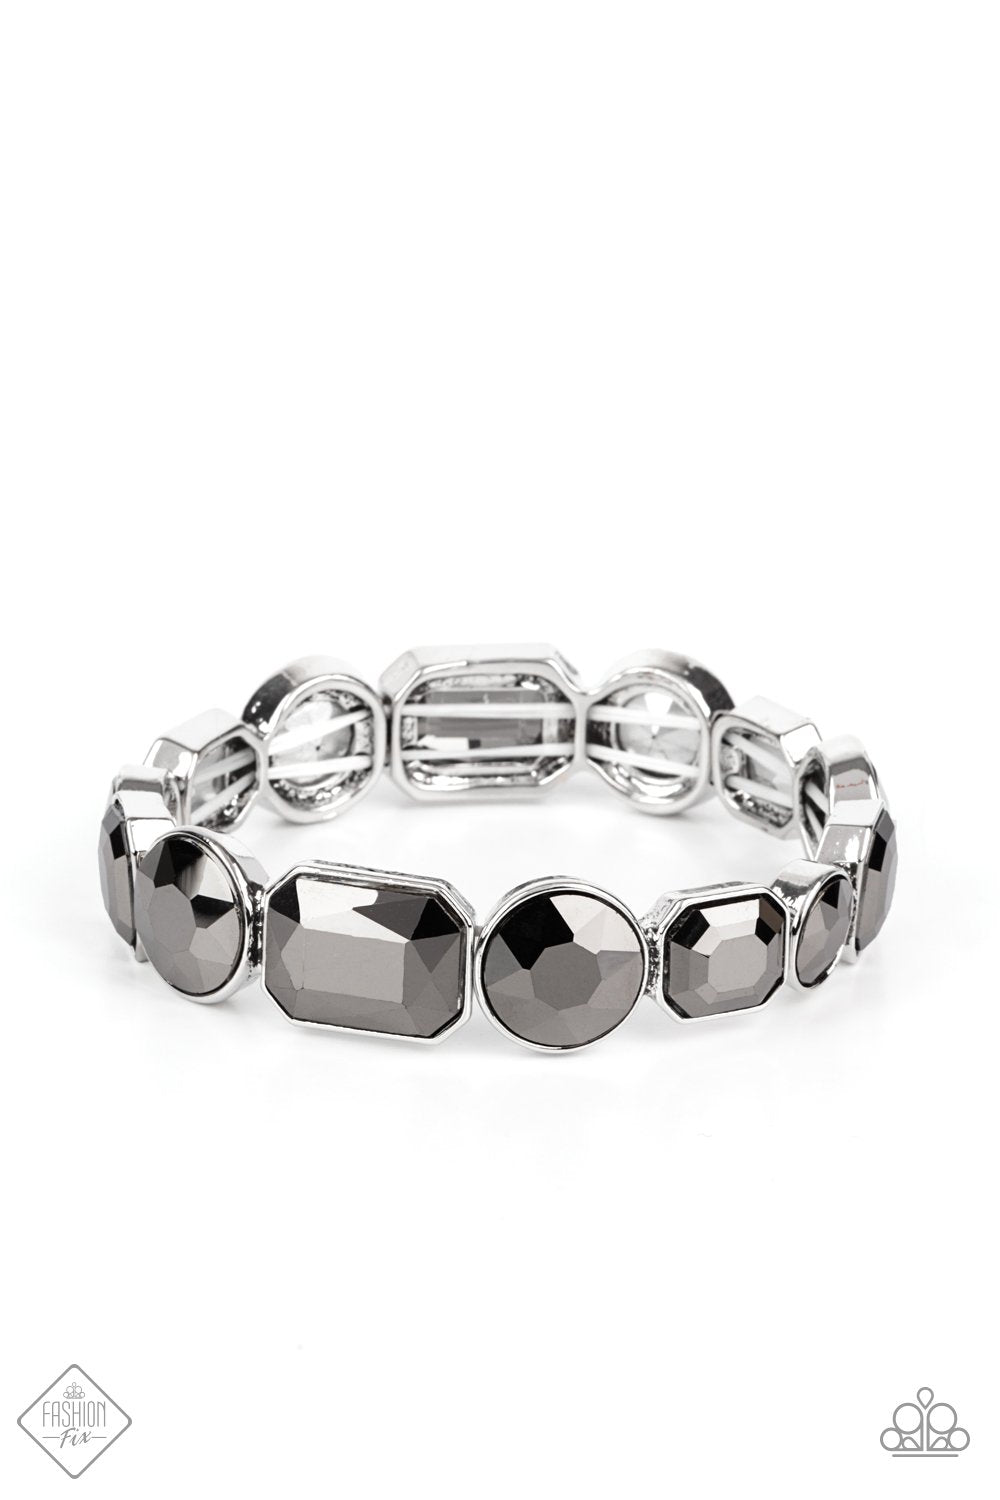 Extra Exposure - Silver - March 2021 Paparazzi Fashion Fix Bracelet